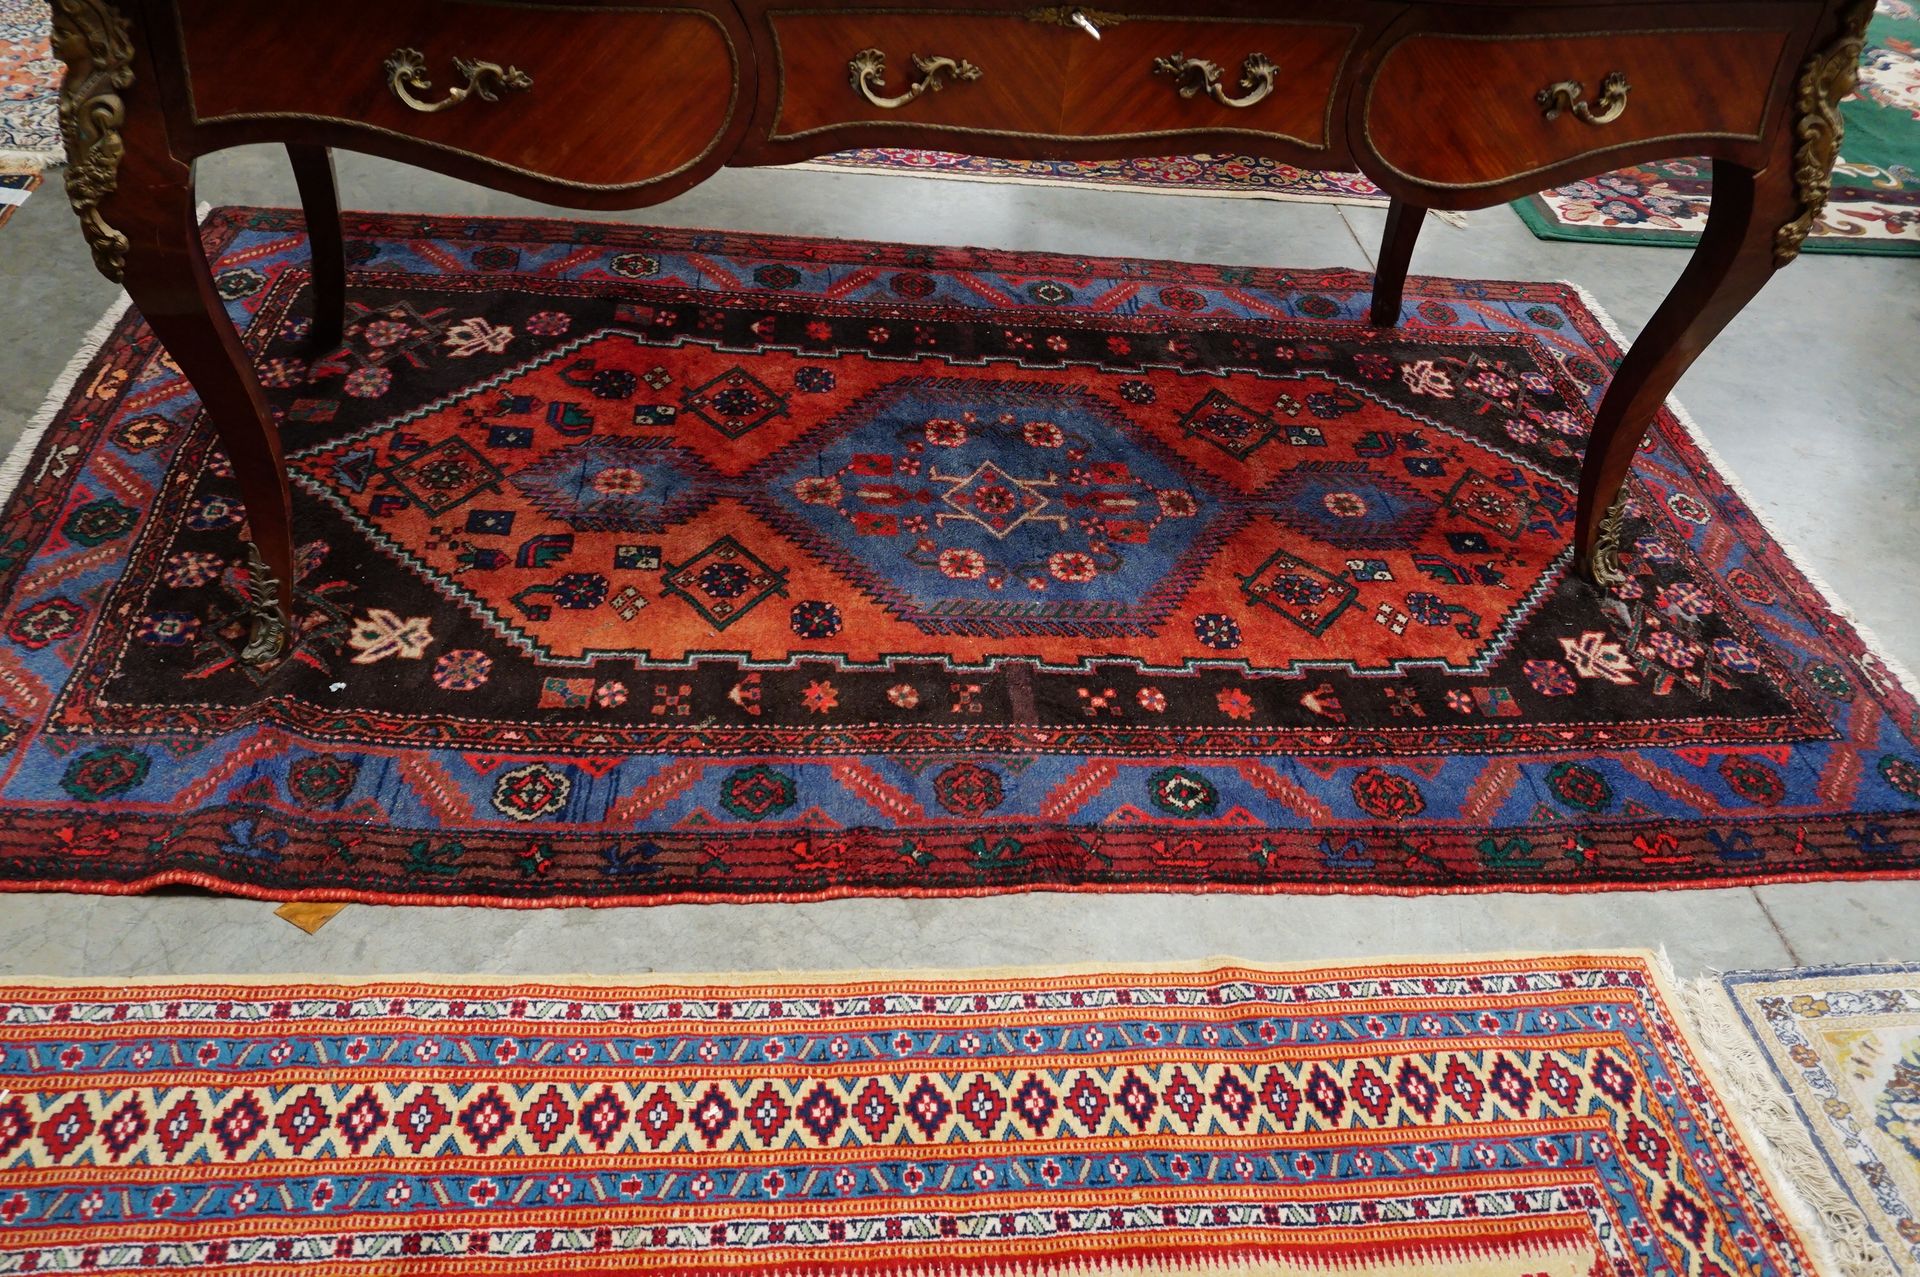 Null Iranian carpet - 230 x 142